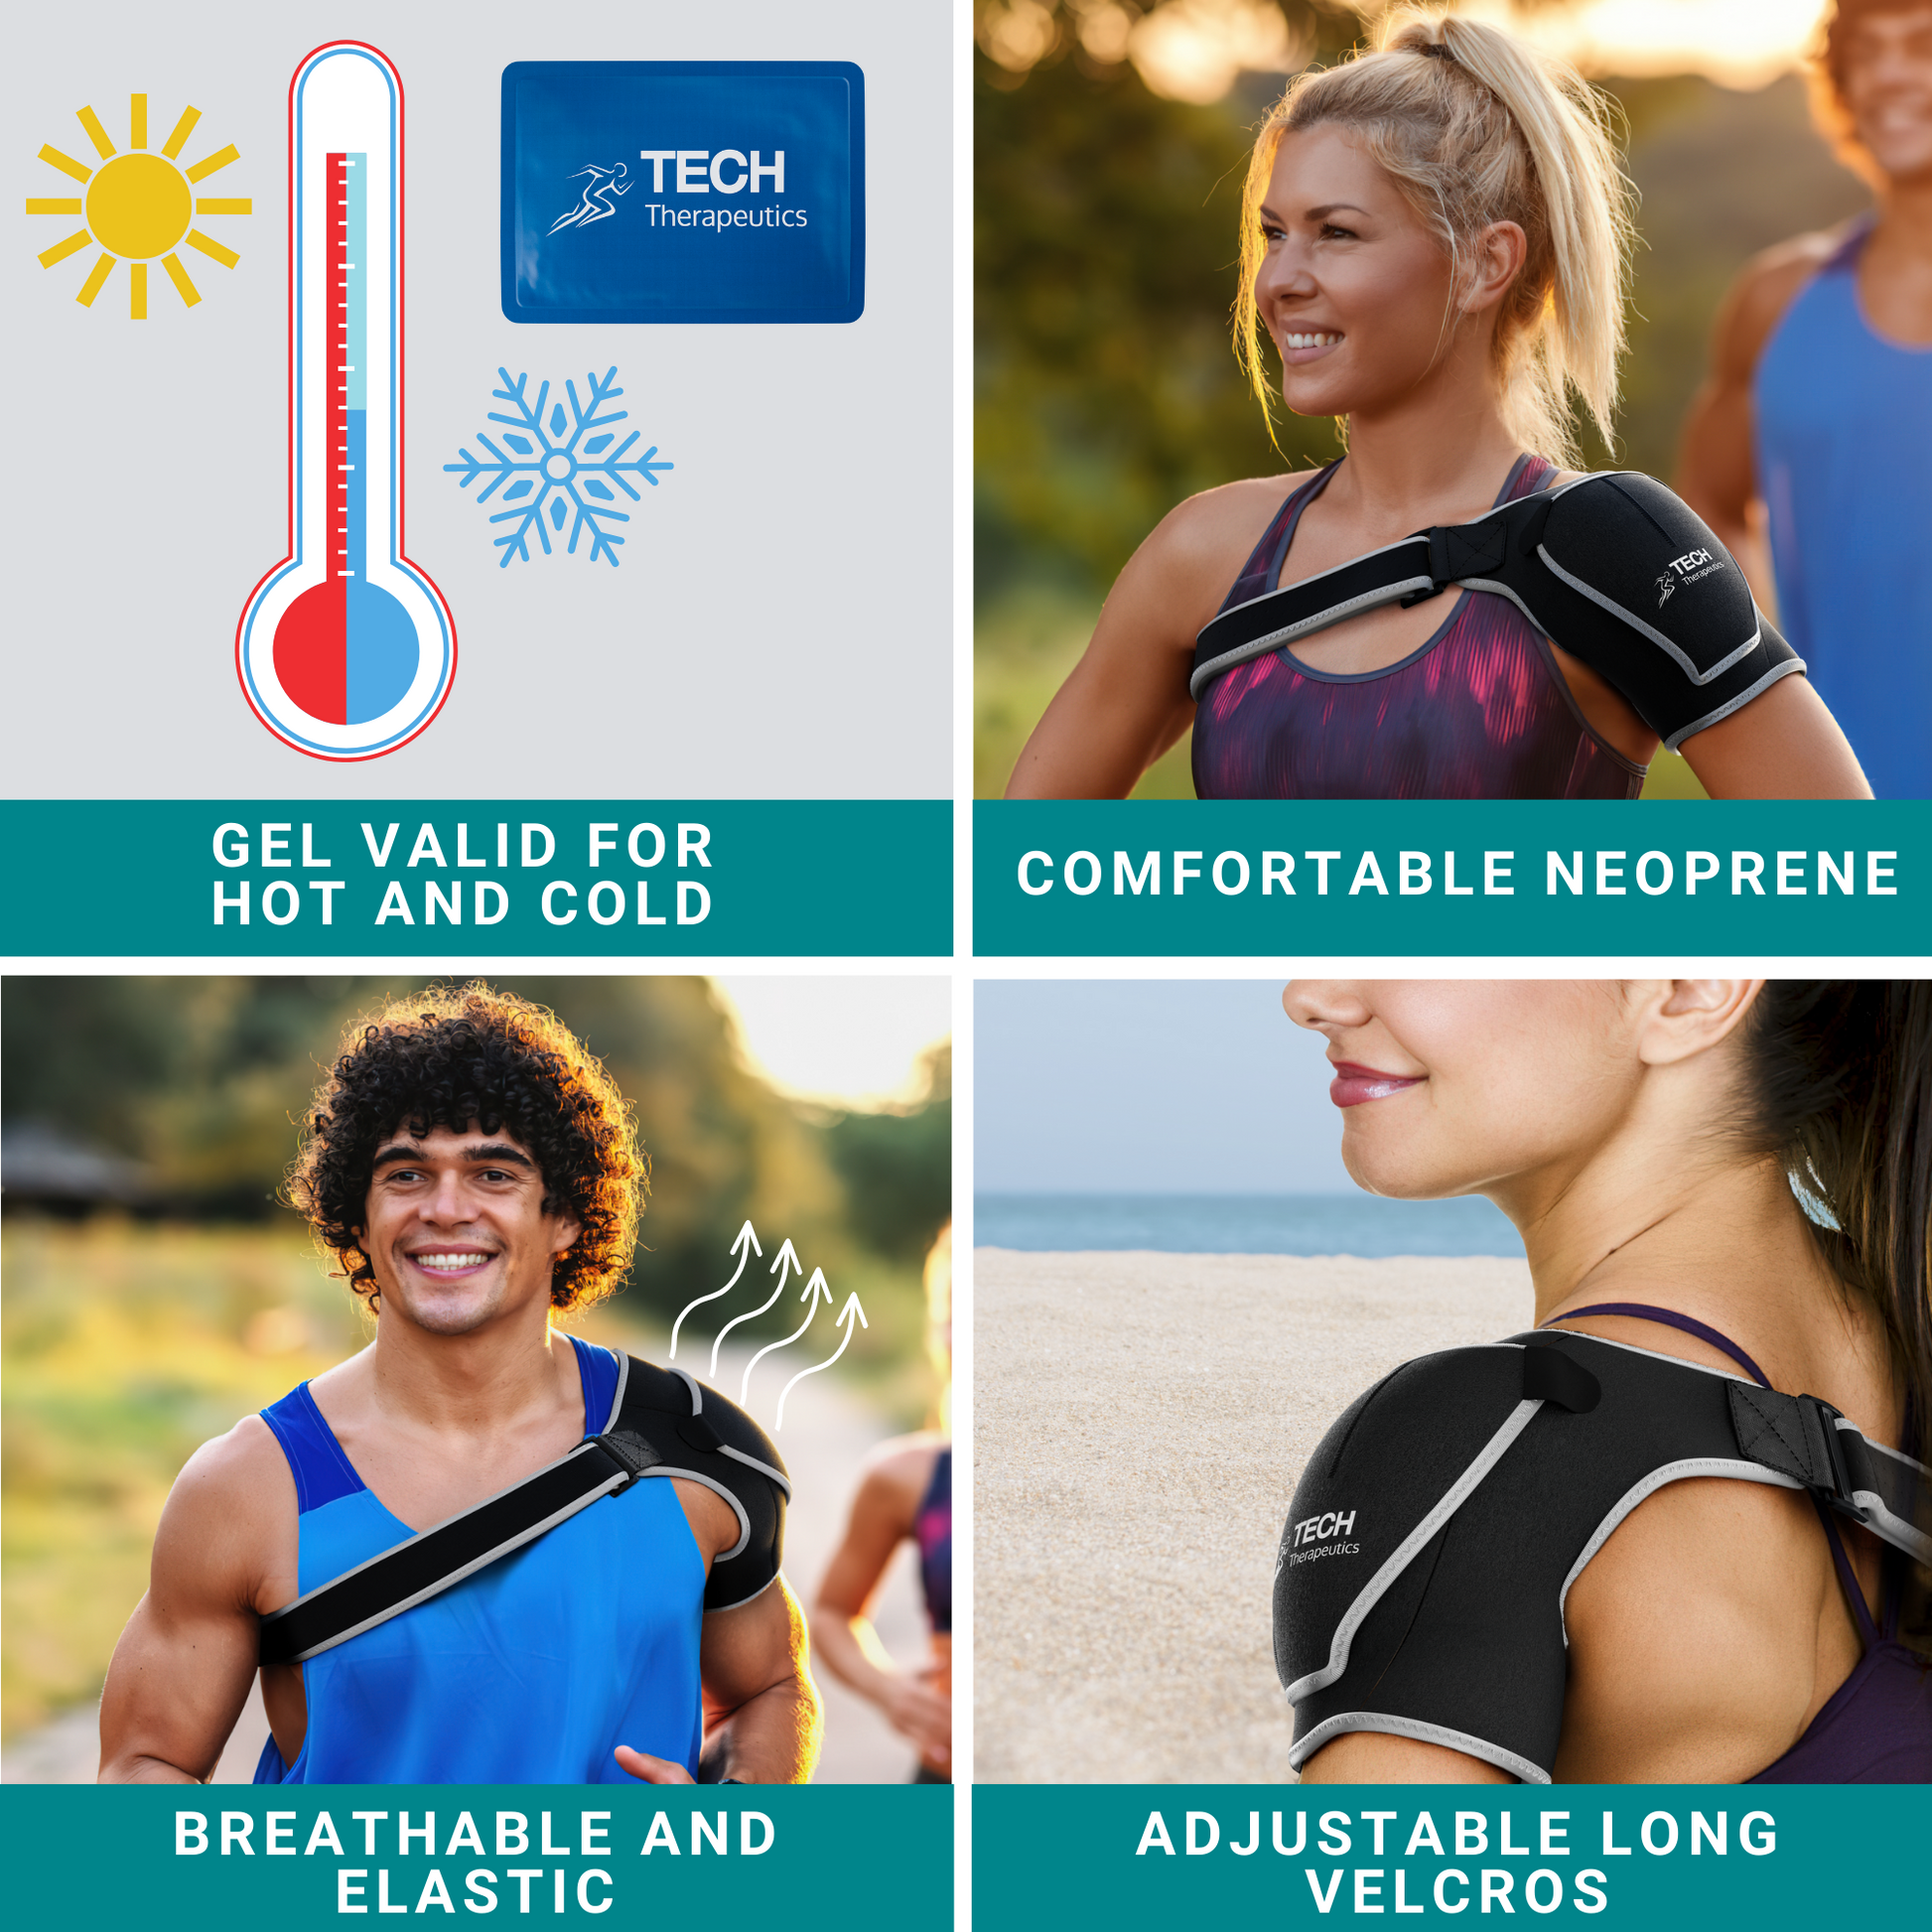 Breathable Neoprene Shoulder Brace Unisex Design For Injuries